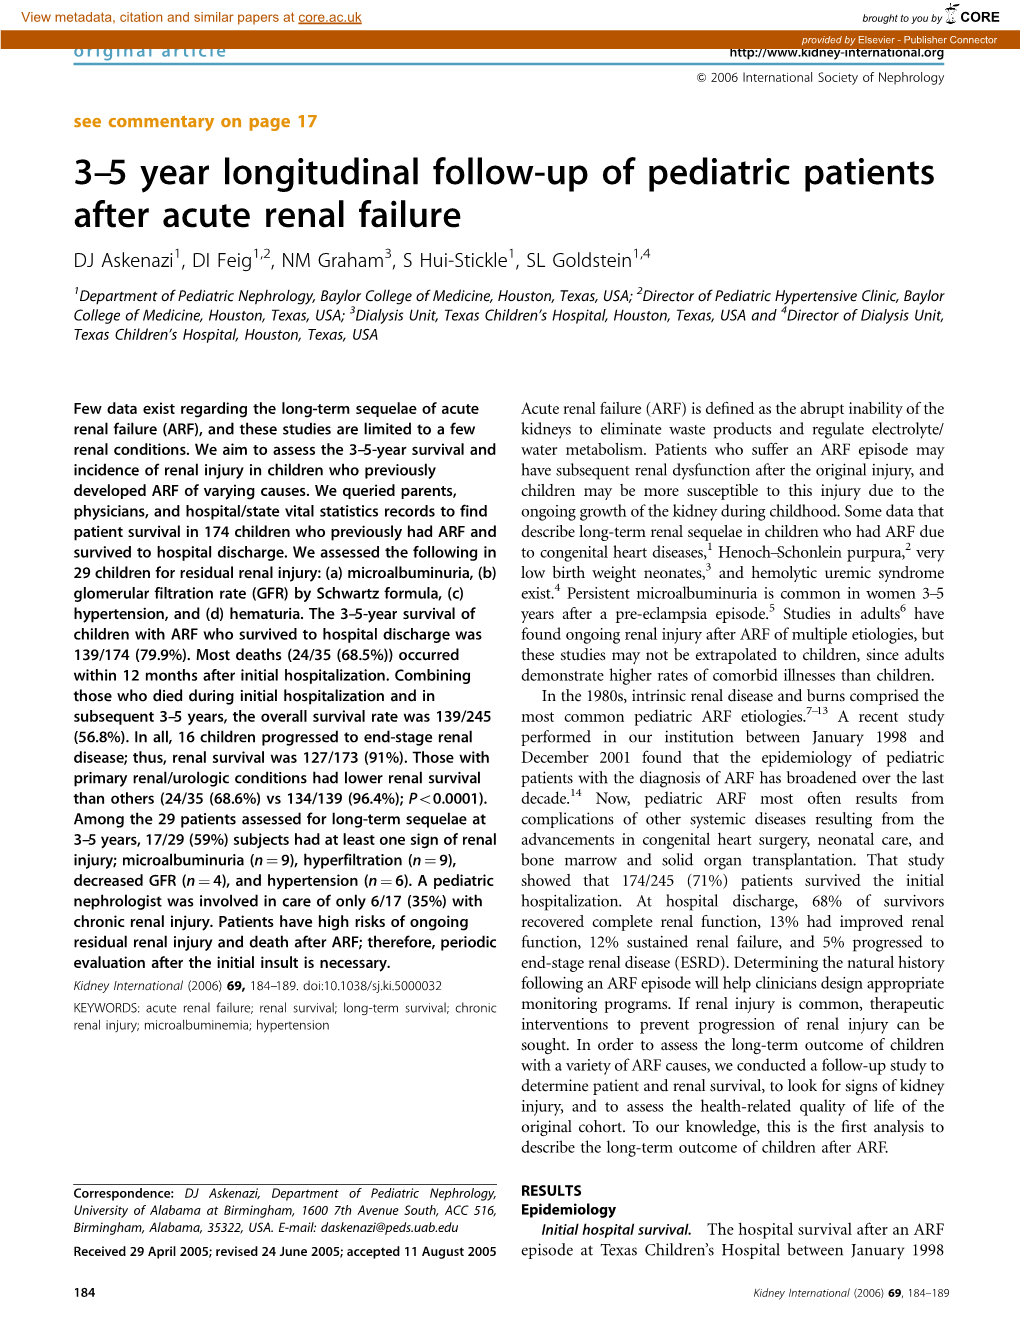 3–5 Year Longitudinal Follow-Up of Pediatric Patients After Acute Renal Failure DJ Askenazi1, DI Feig1,2, NM Graham3, S Hui-Stickle1, SL Goldstein1,4